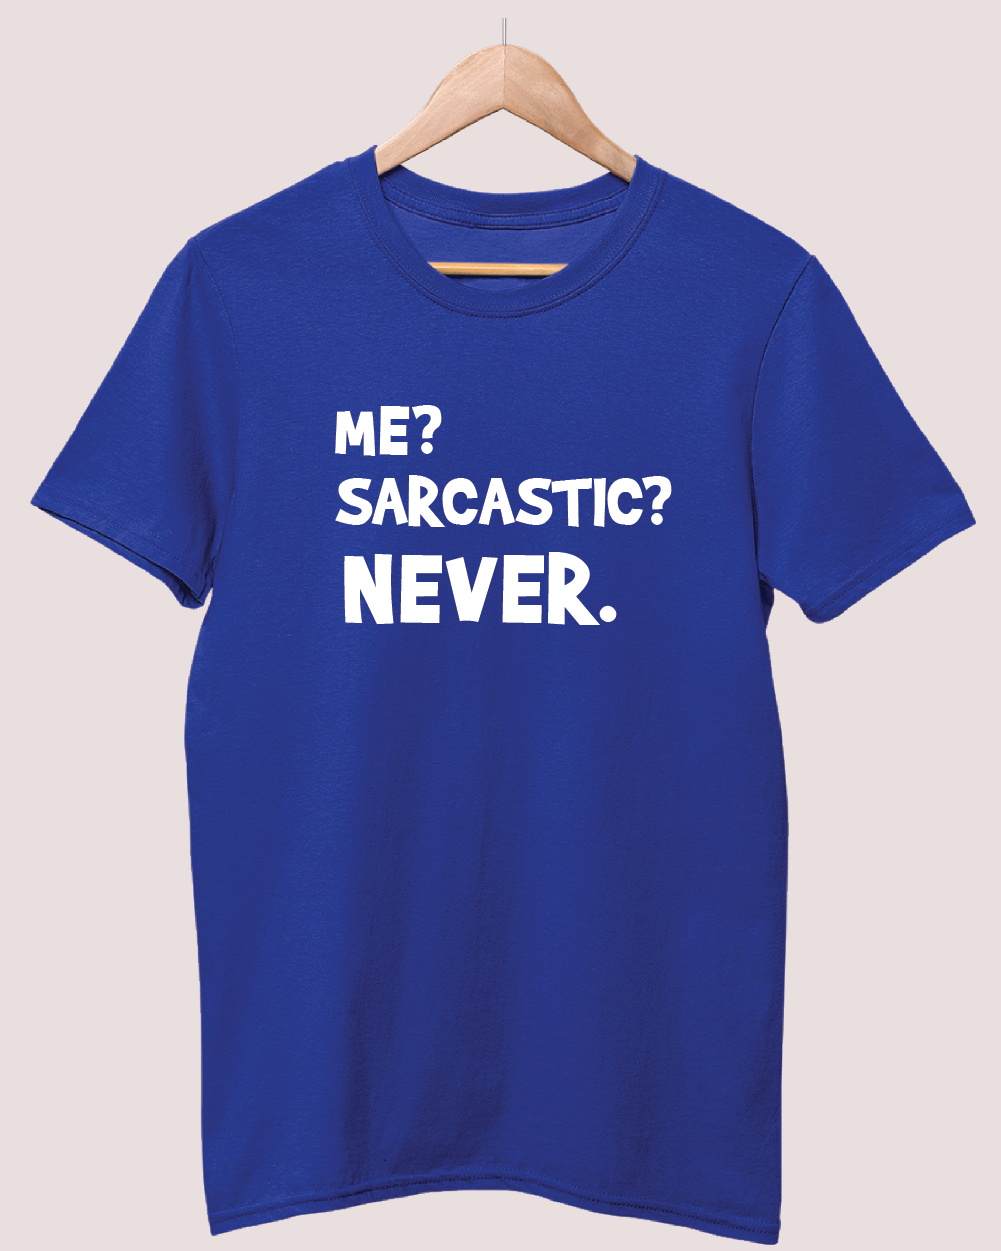 Me? Sarcastic? Never t-shirt